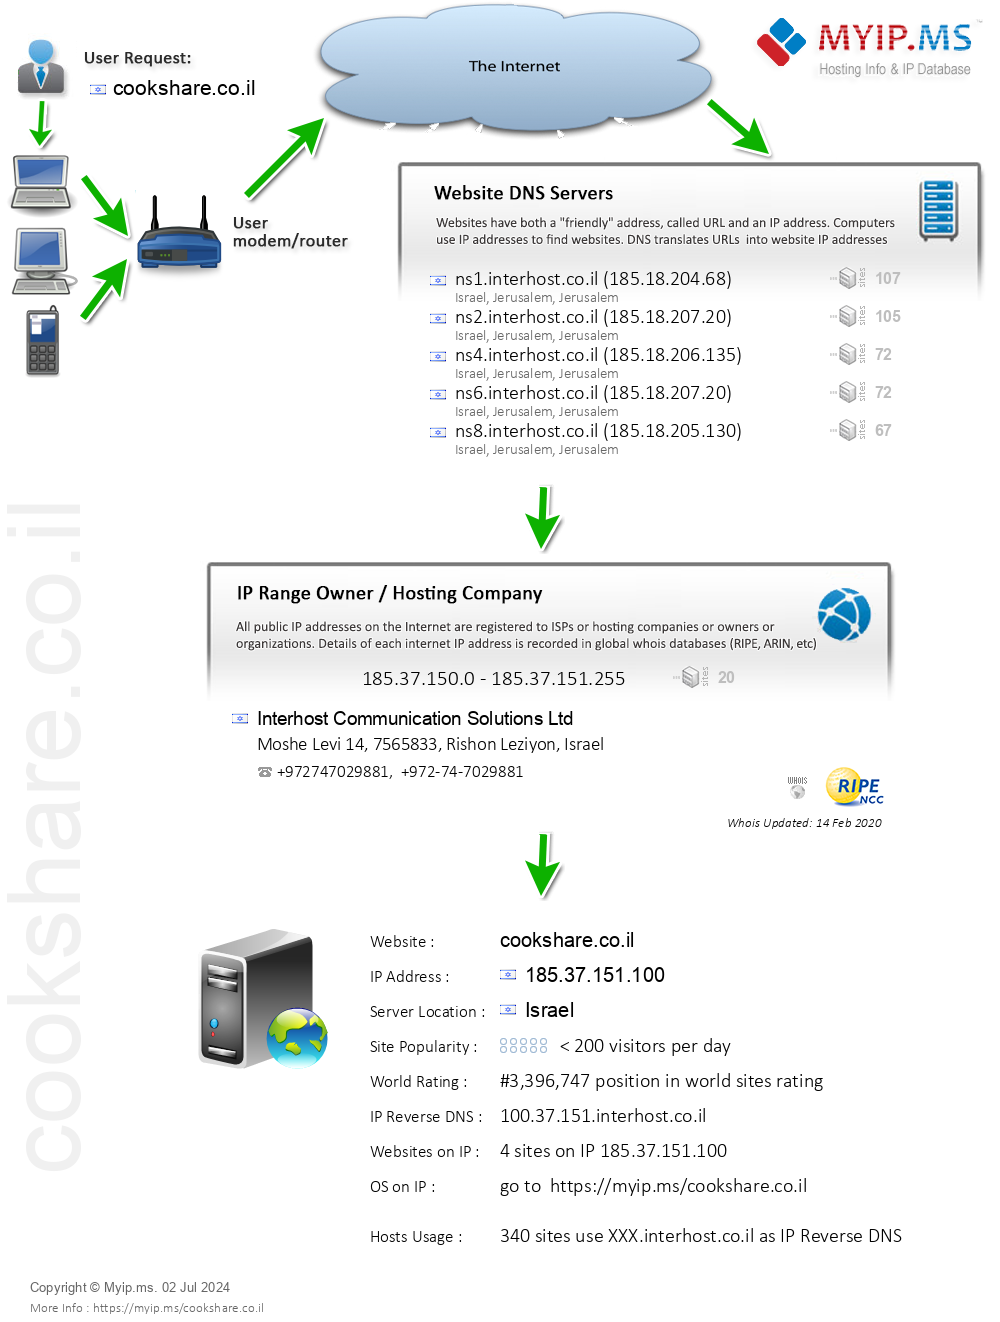 Cookshare.co.il - Website Hosting Visual IP Diagram